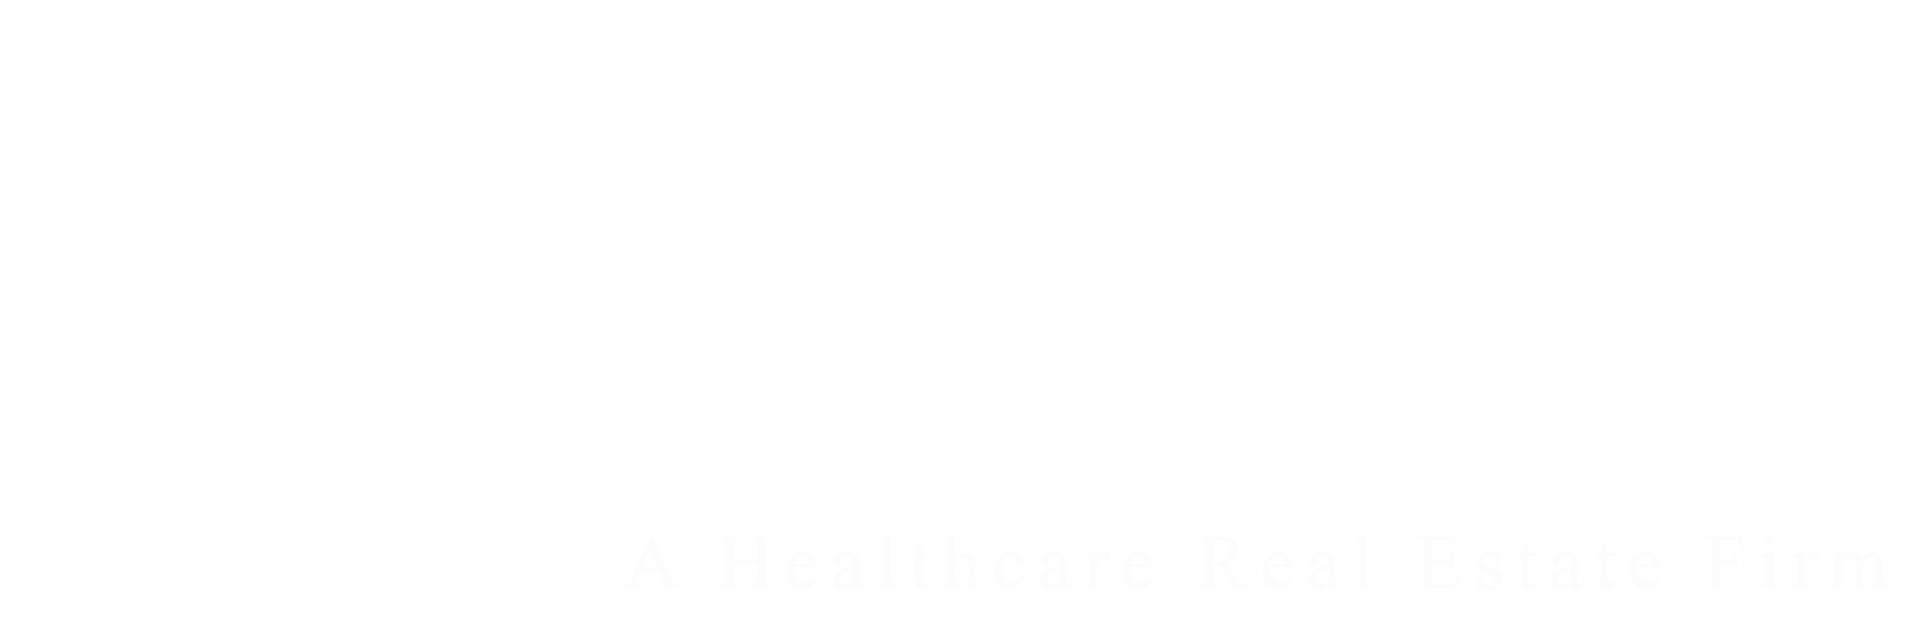 HBRE-Horizontal-2021-White